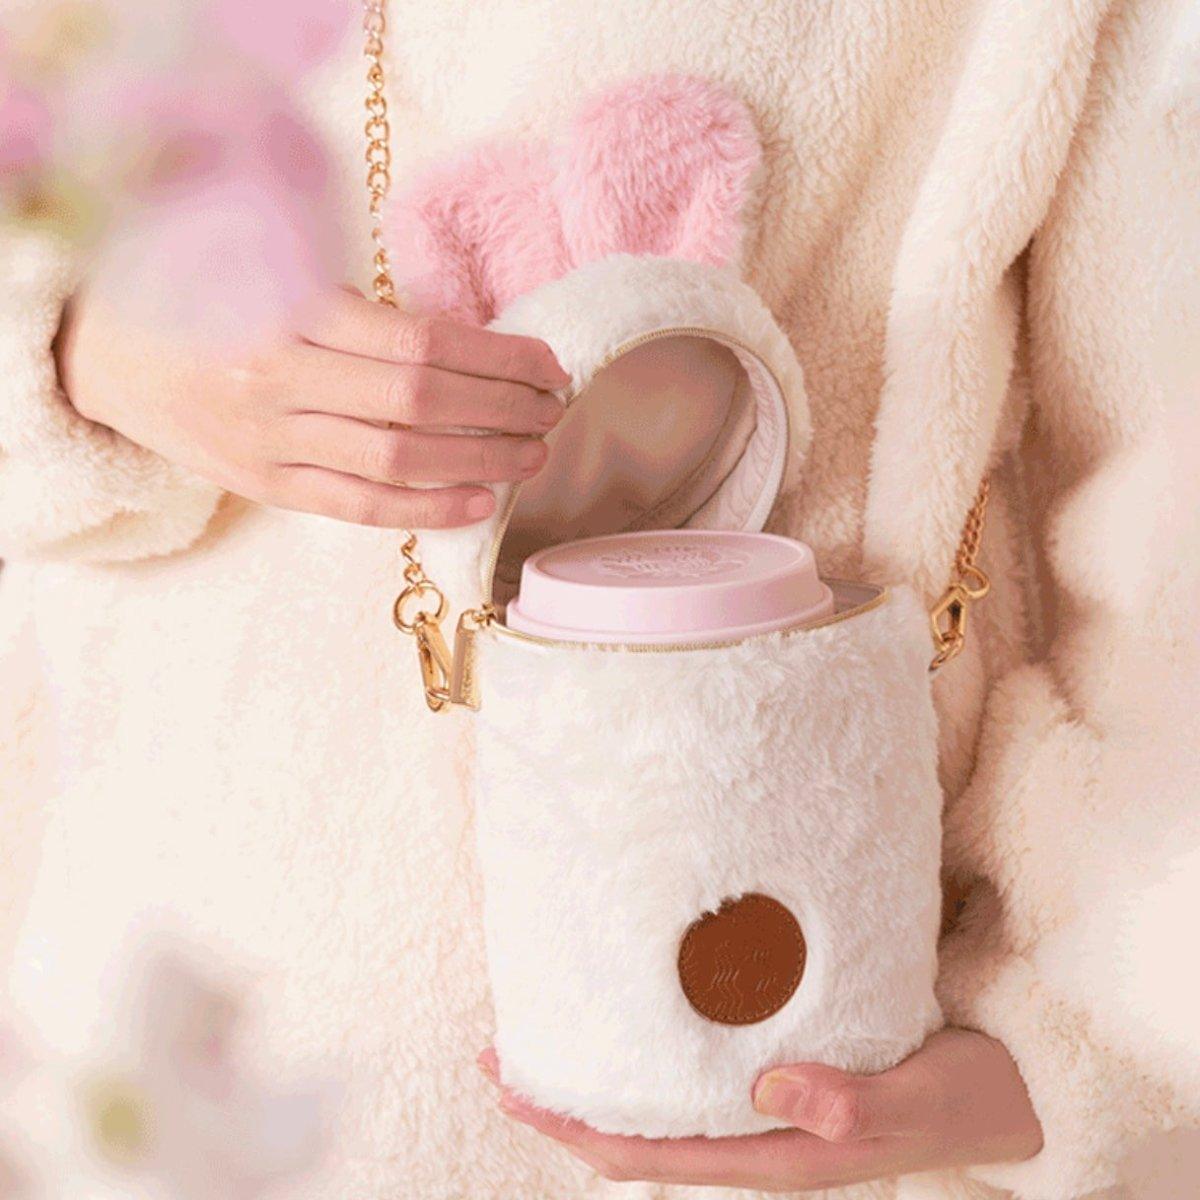 Starbucks 370ml/13oz Pink Gradient Travelling Cup with Furry Bunny Bag - Ann Ann Starbucks